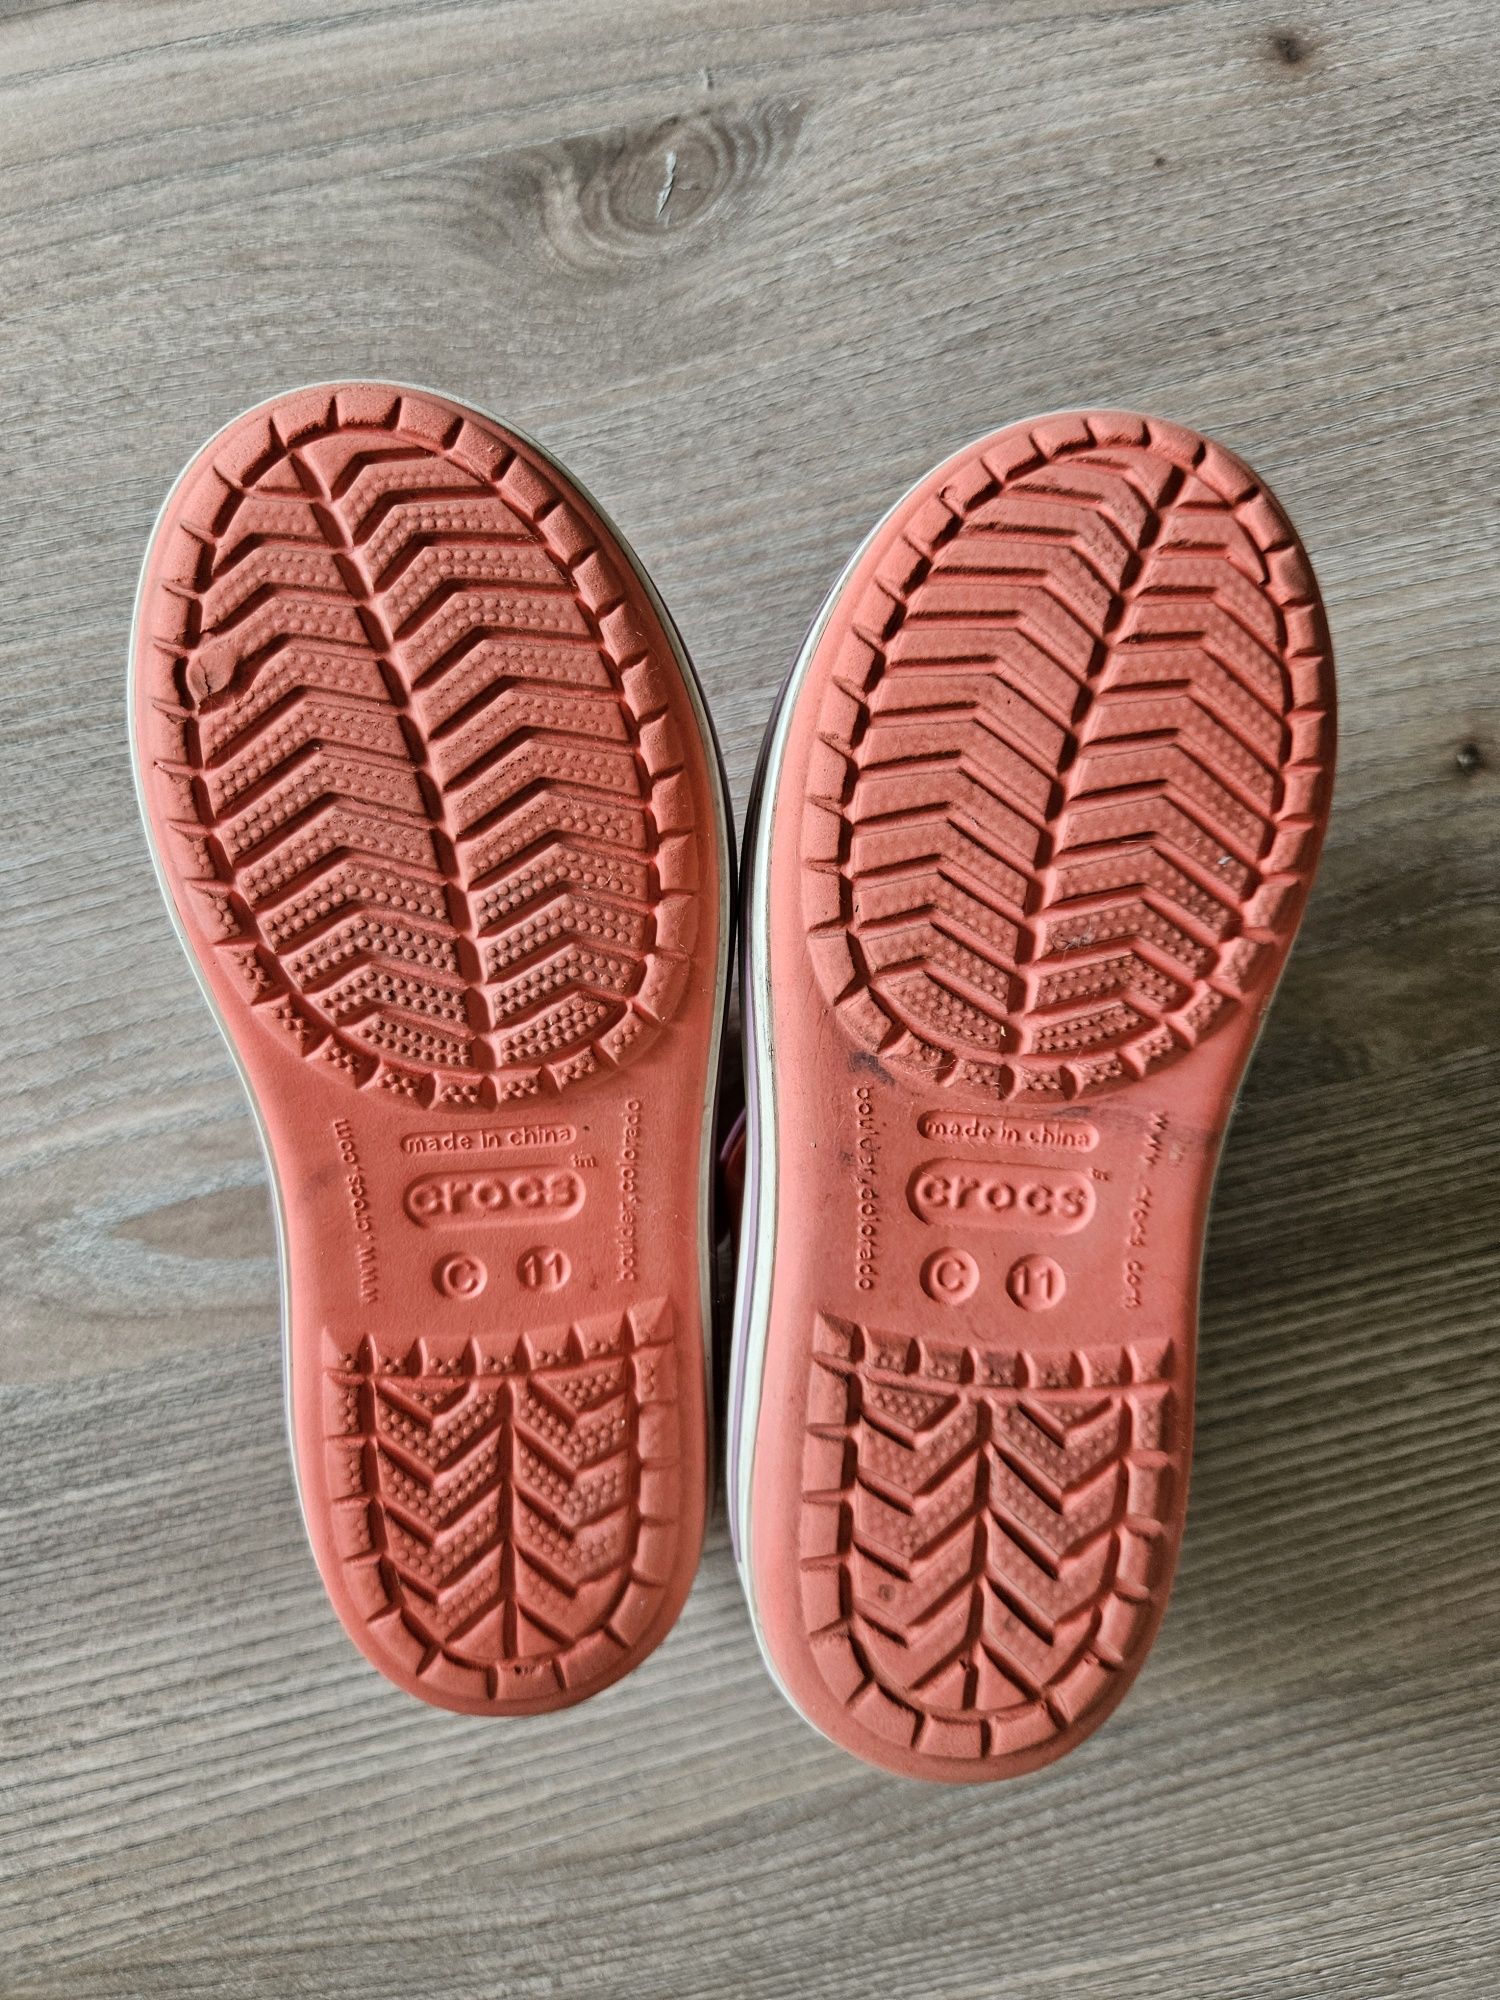 Crocs size 28-29 (11C)